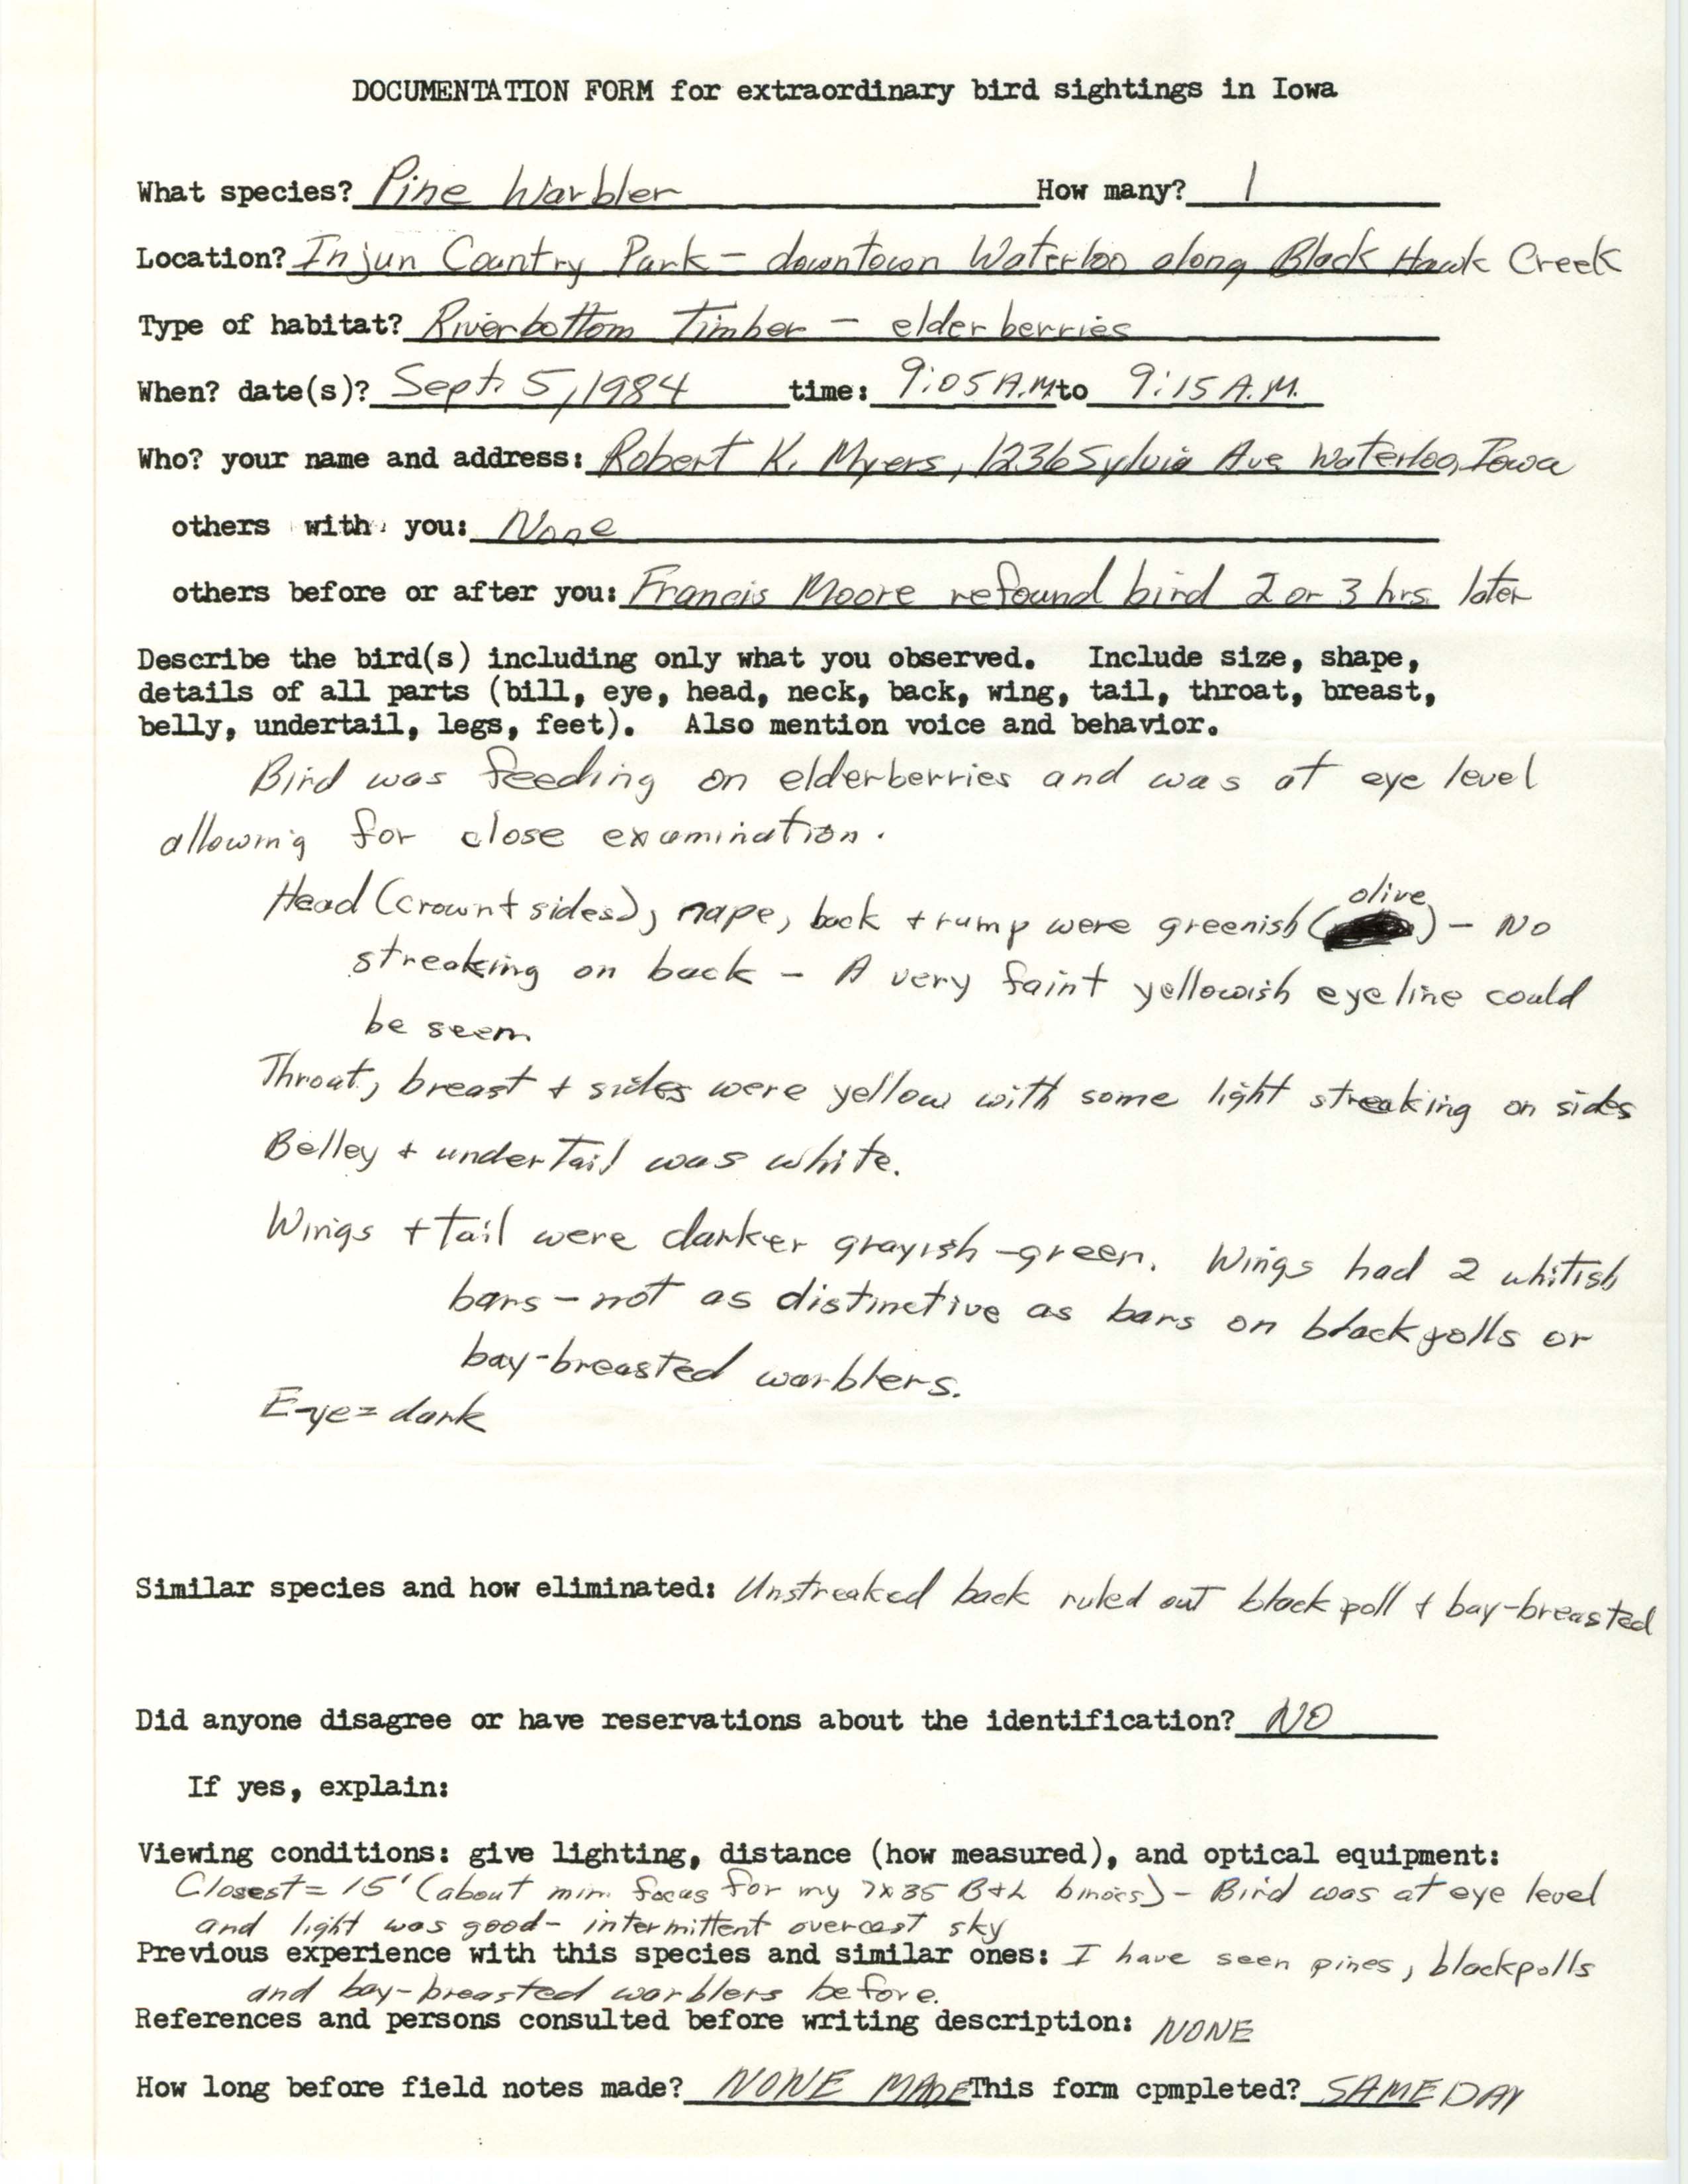 Rare bird documentation form for Pine Warbler at Hope Martin Memorial Park in Waterloo, 1984